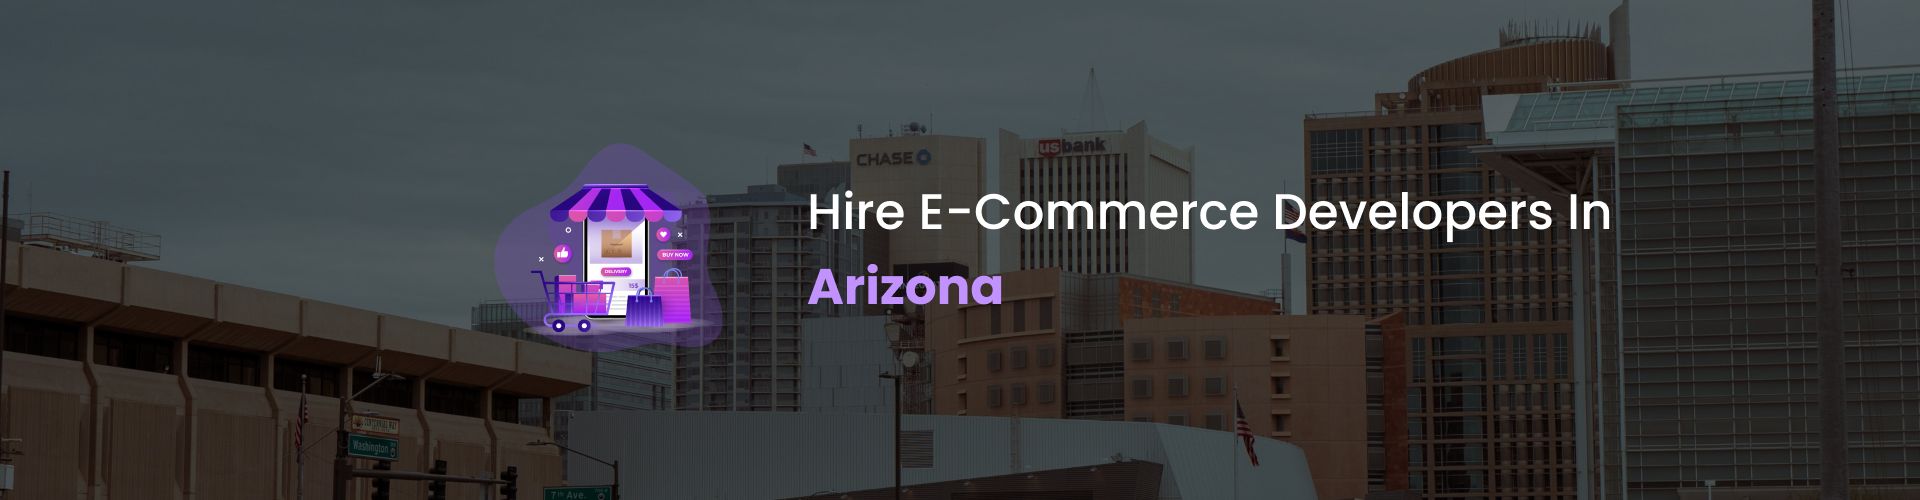 hire ecommerce developers in arizona